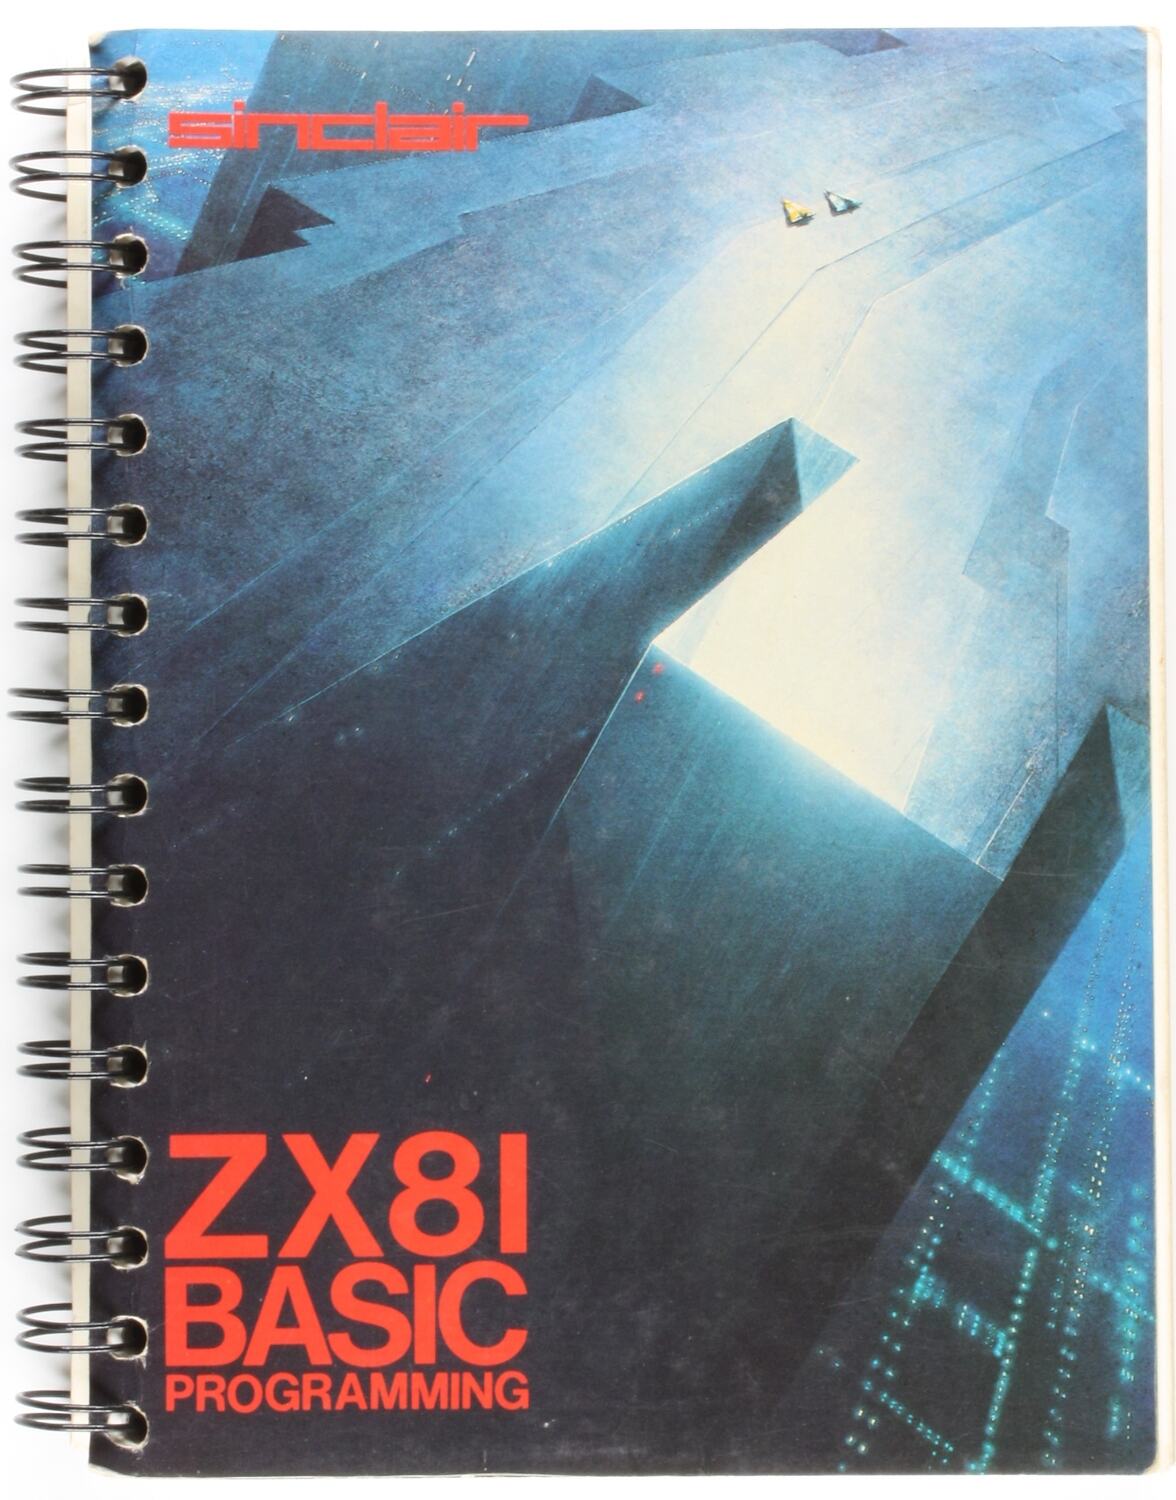 Manual - Basic Programming, Sinclair ZX81 Computer, United 